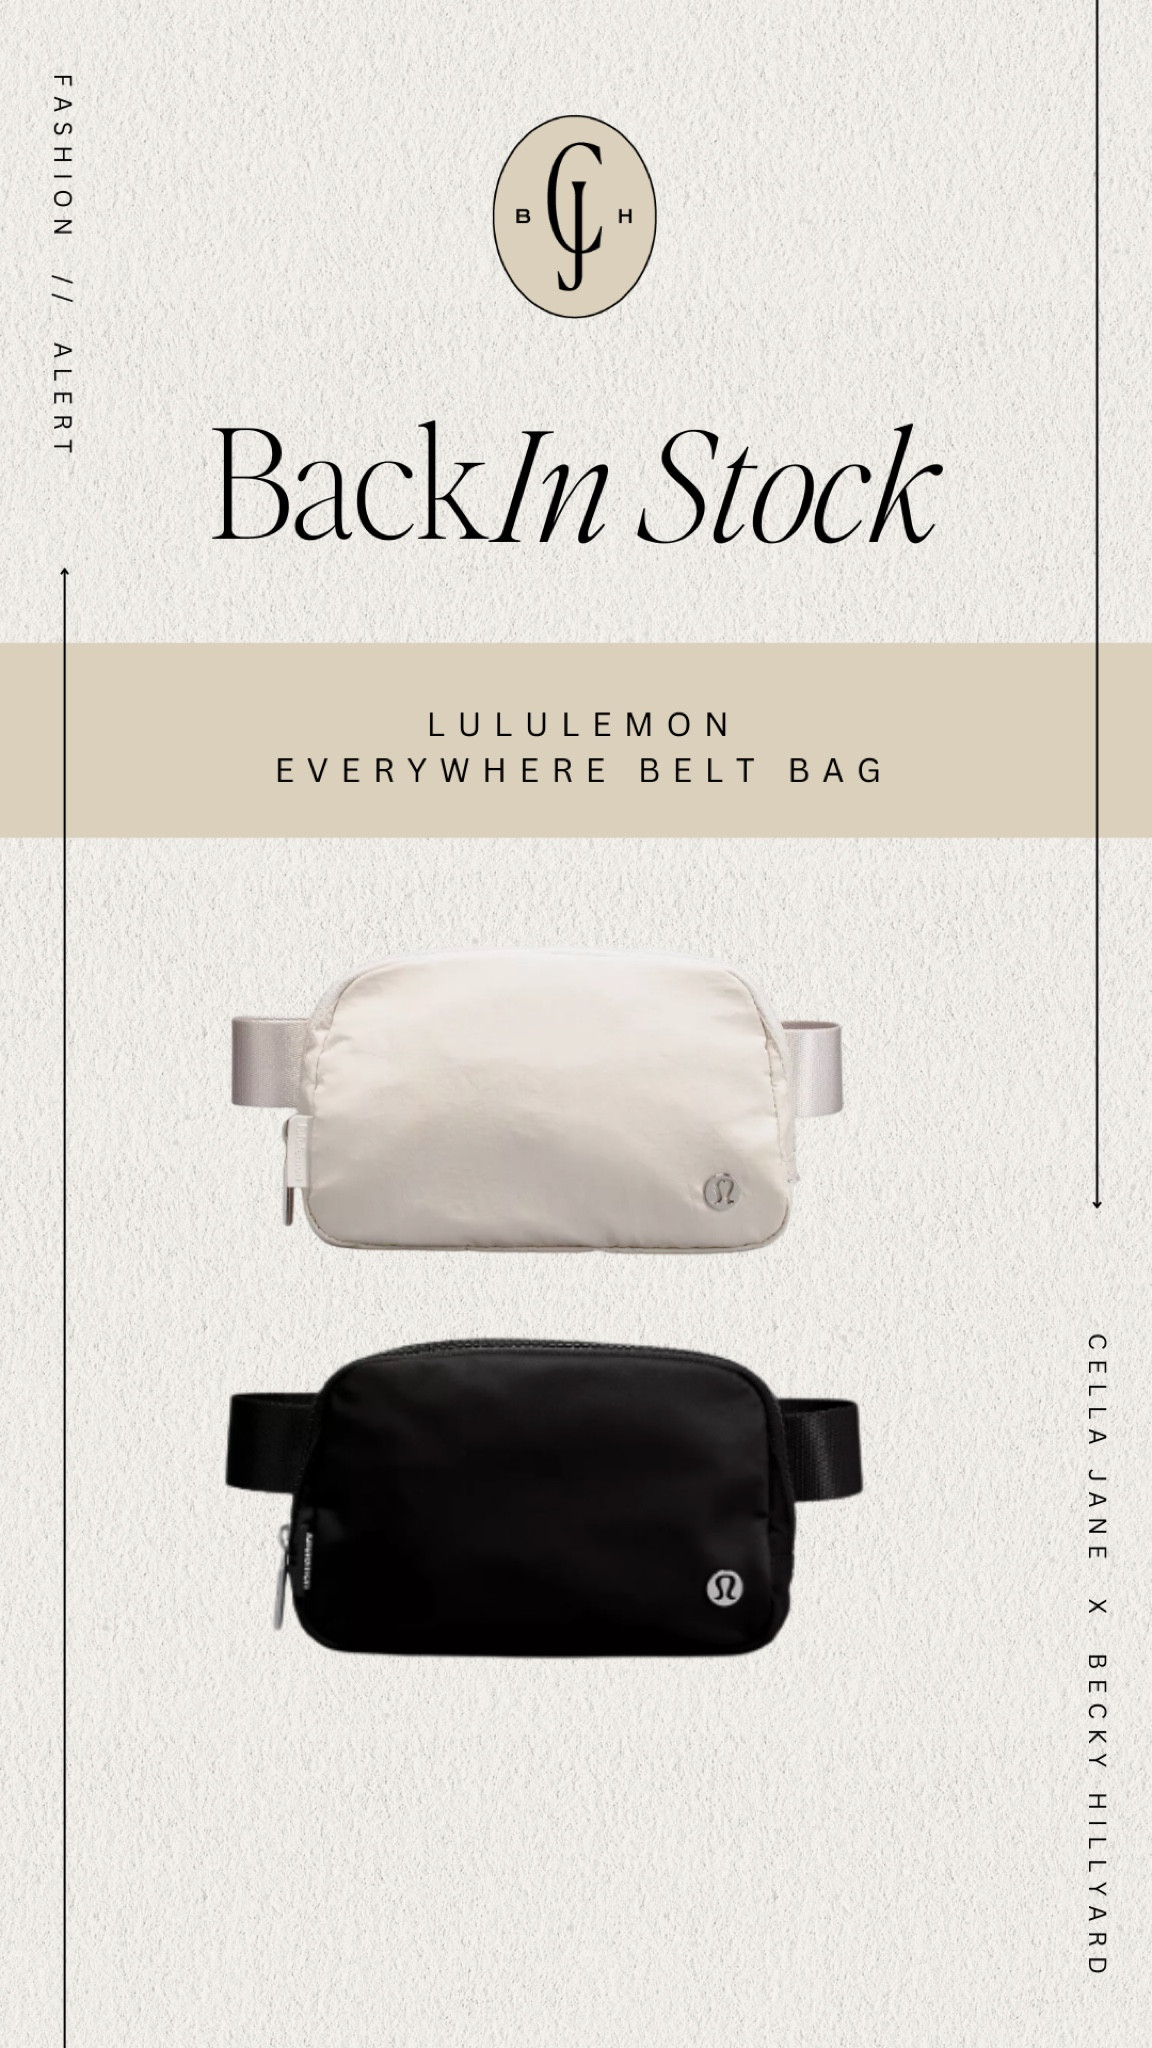 The Lululemon Everywhere Belt Bag Is Back in Stock